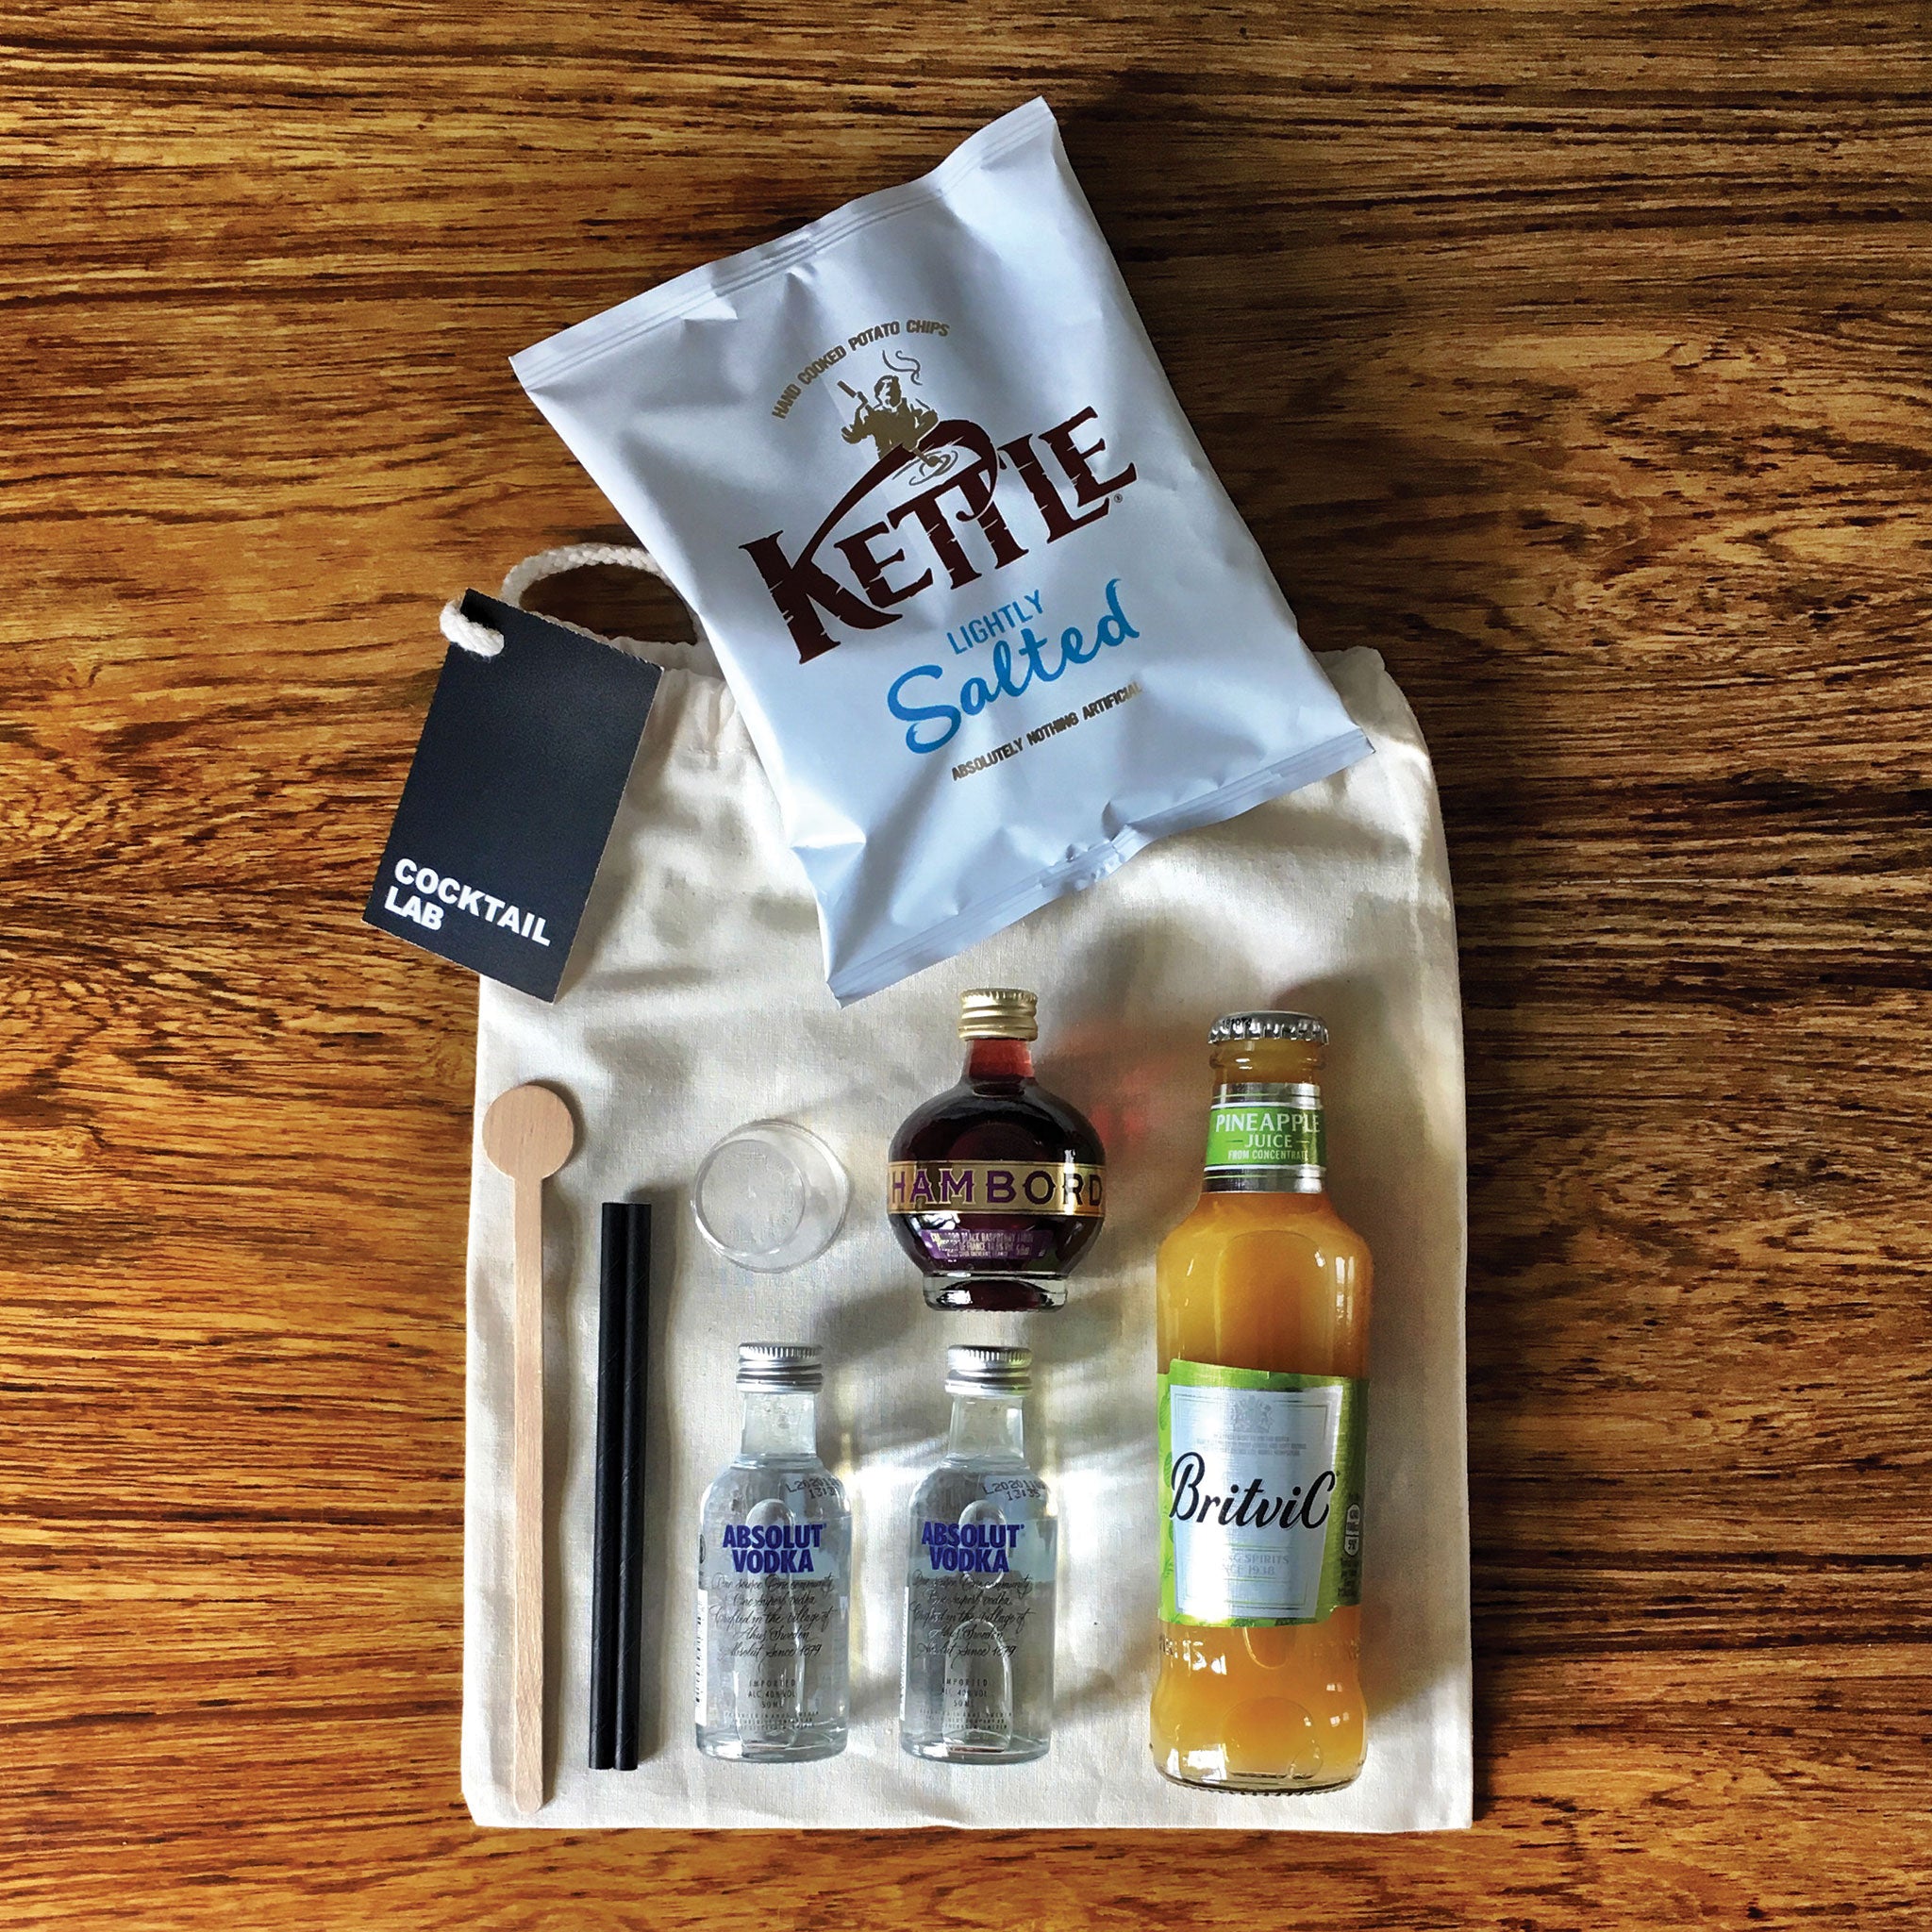 French Martini Cocktail Kit & Crisps Gift Bag